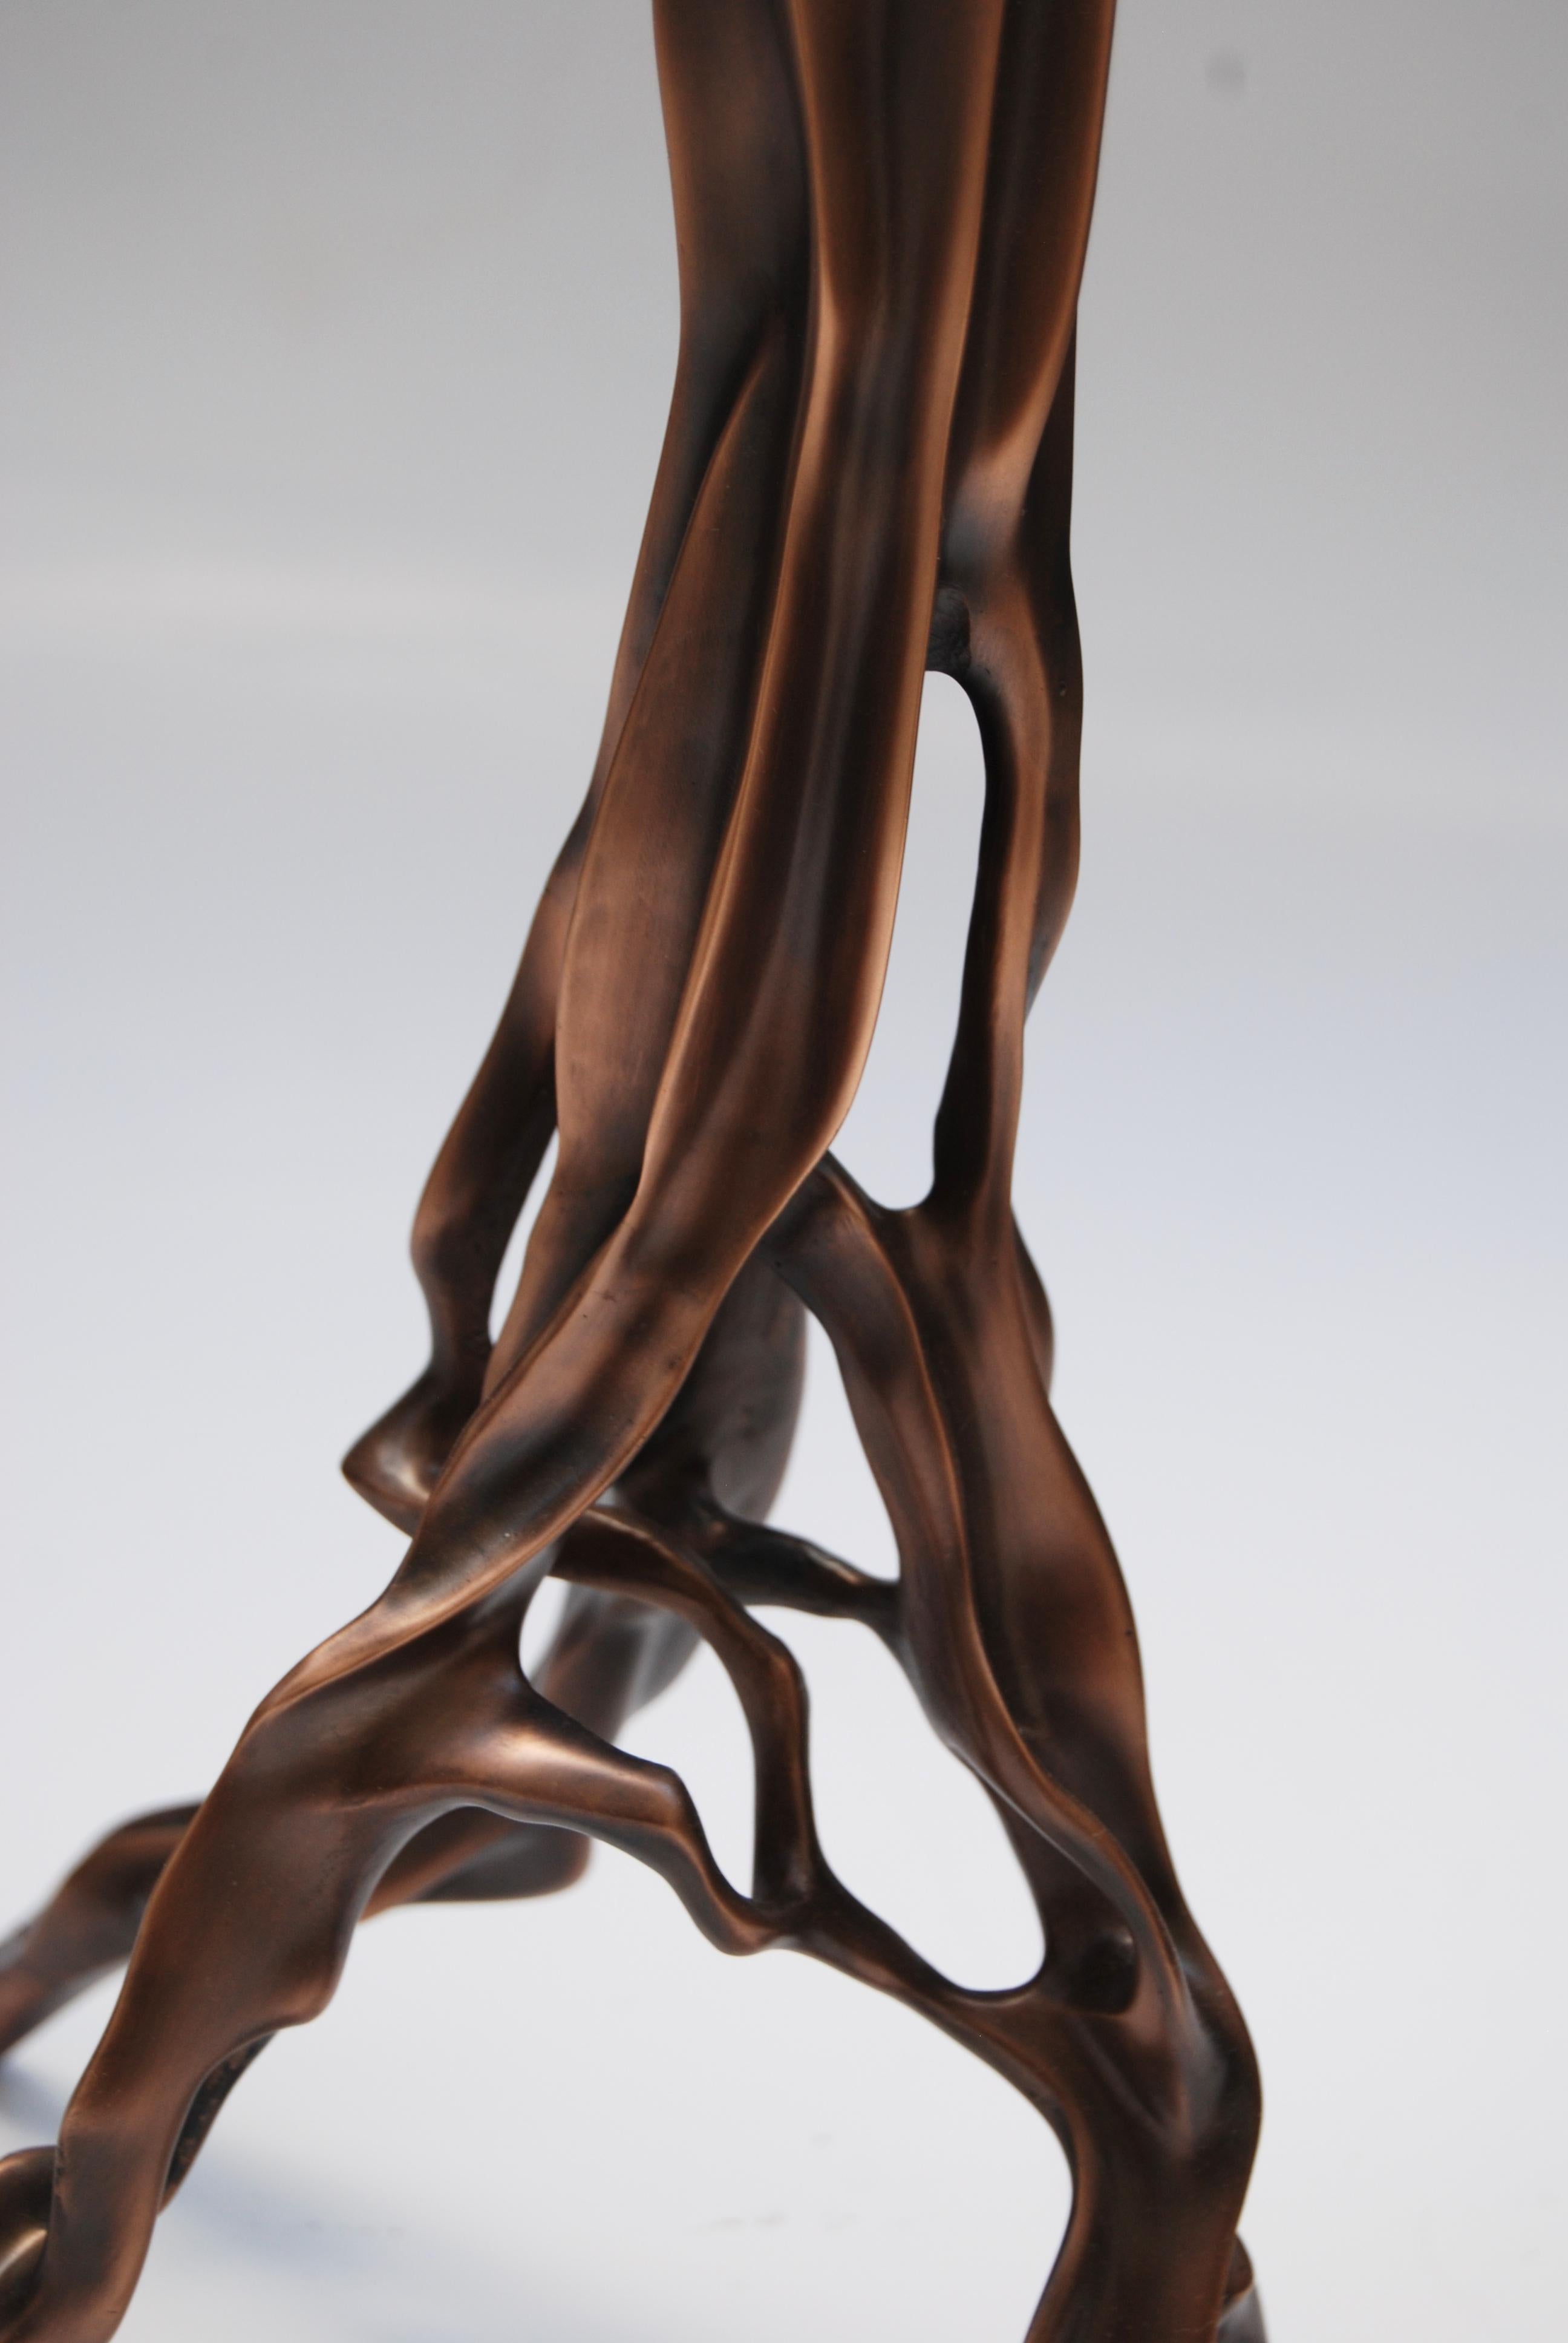 Brazilian Candlestick in Dark Bronze by Fakasaka Design For Sale